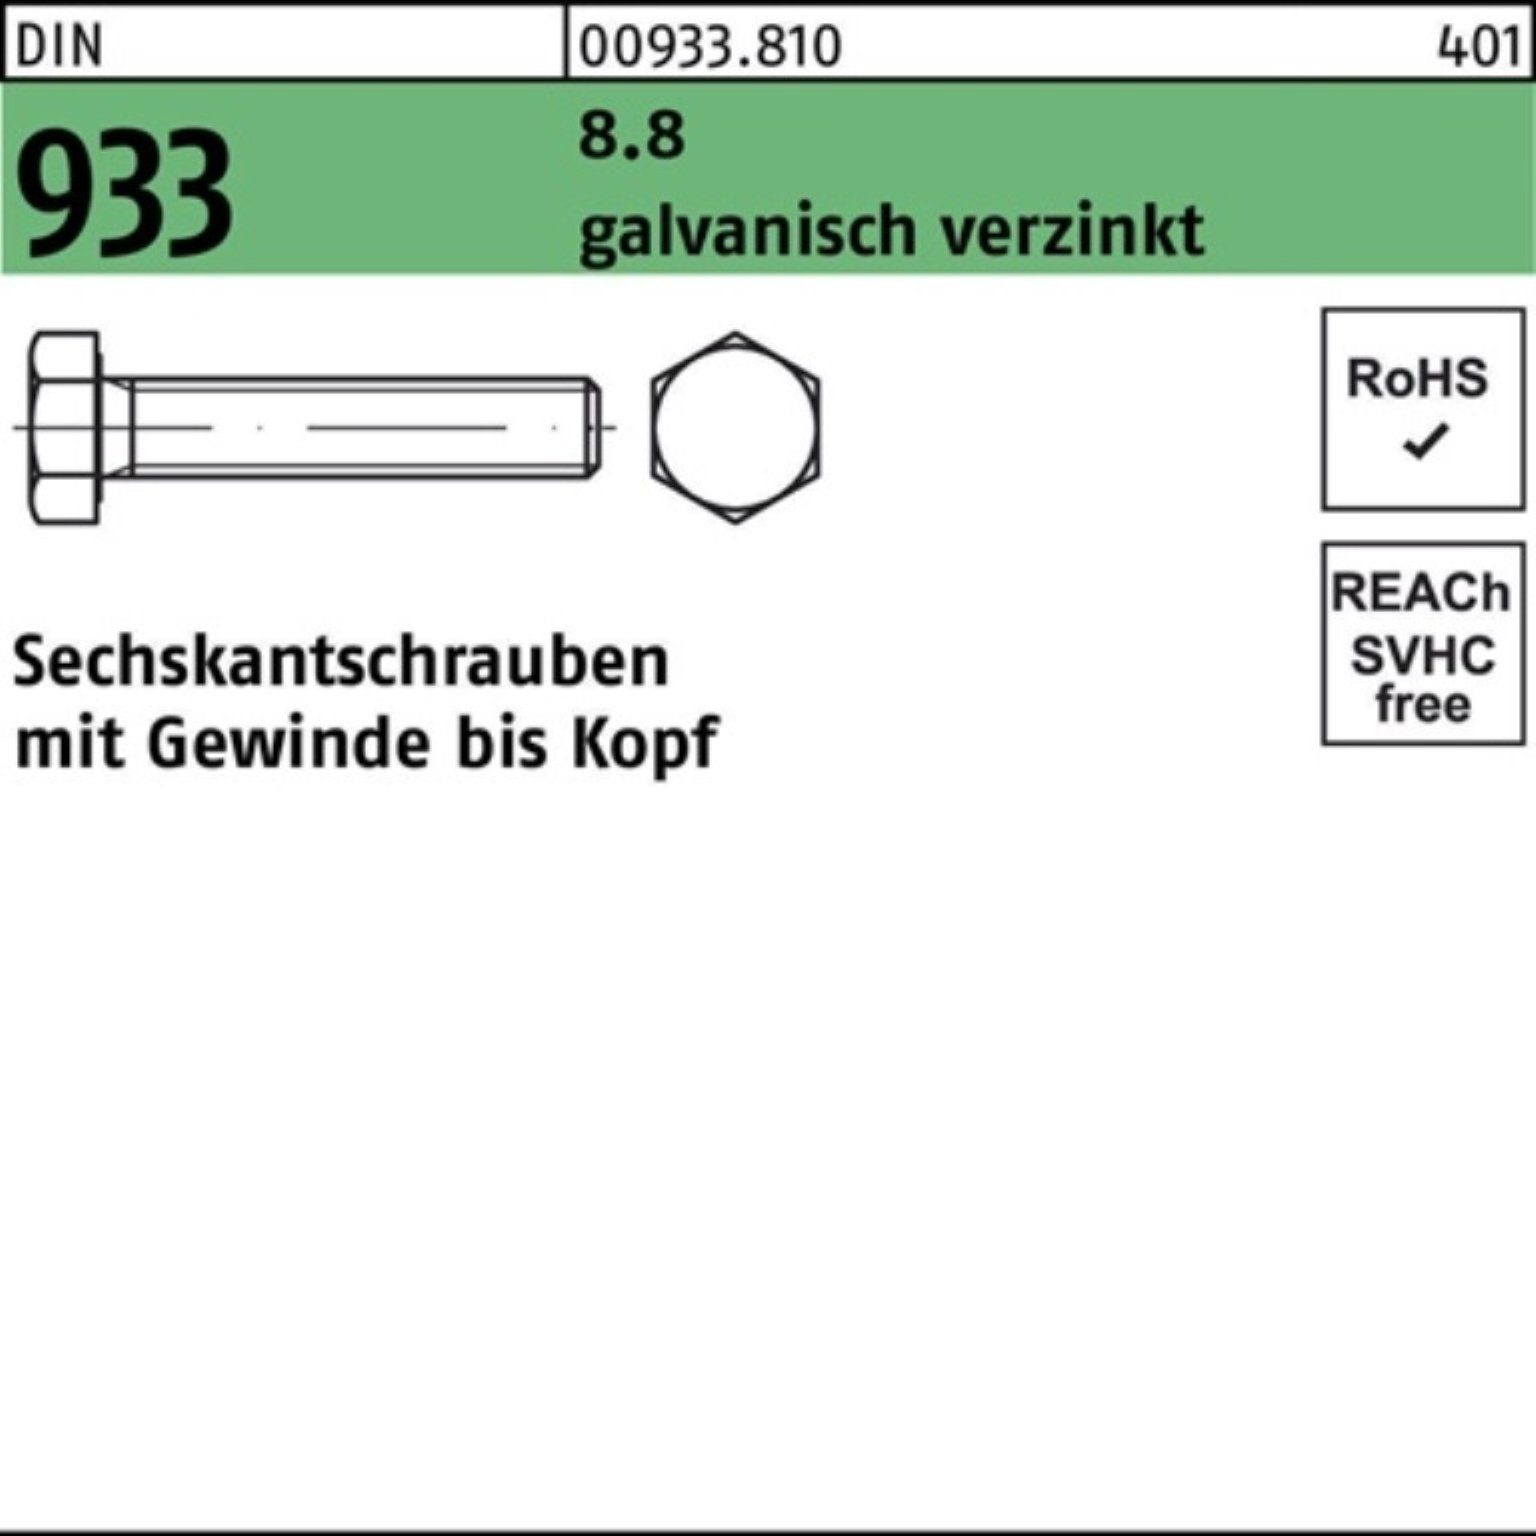 St VG Sechskantschraube Reyher 100 100er 933 Sechskantschraube galv.verz. DIN M16x Pack 8.8 25